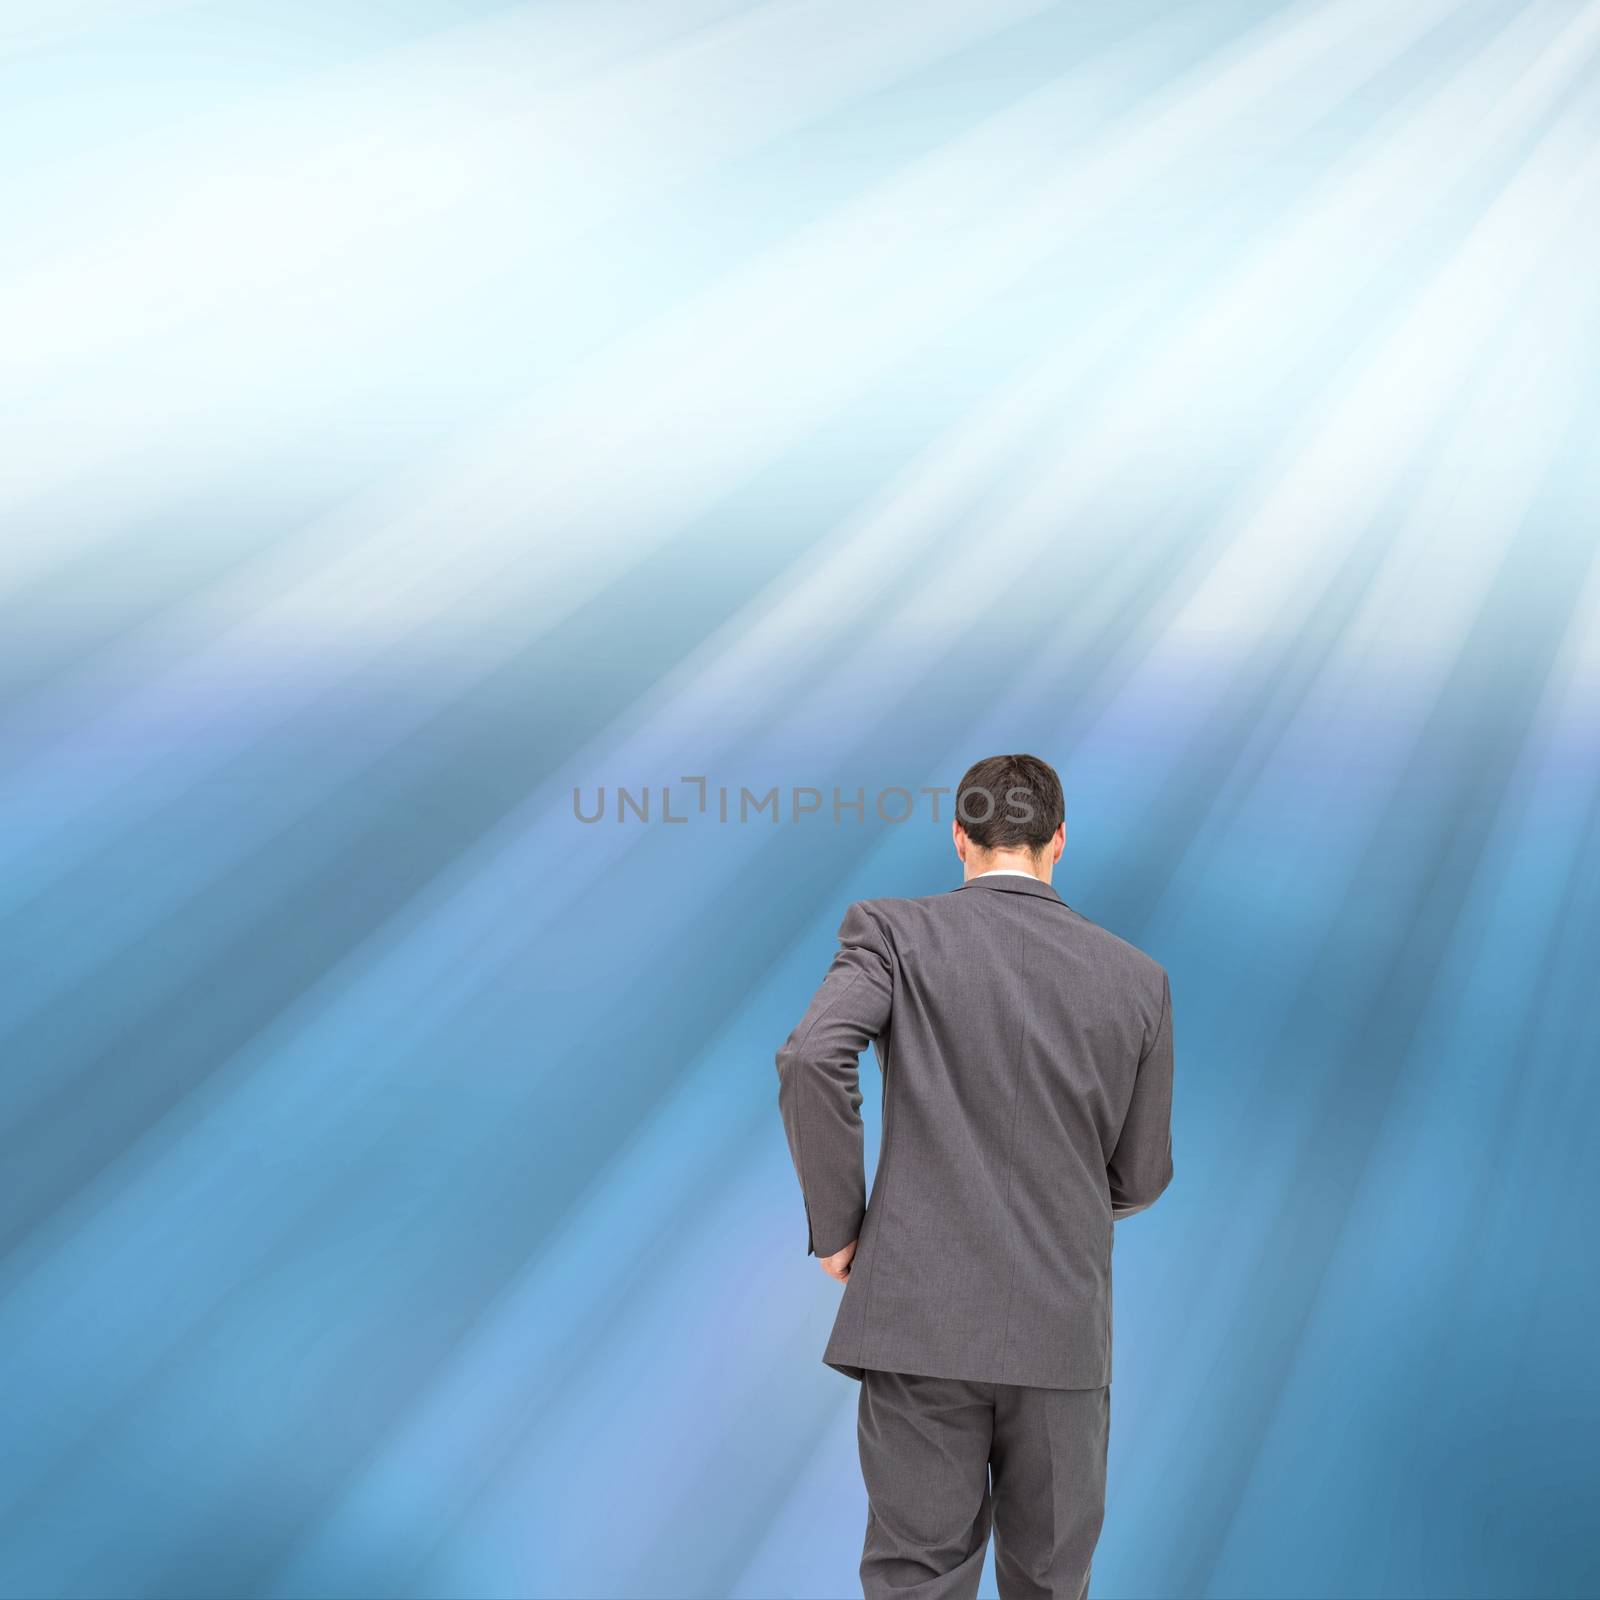 Composite image of businessman walking away on shiny blue background